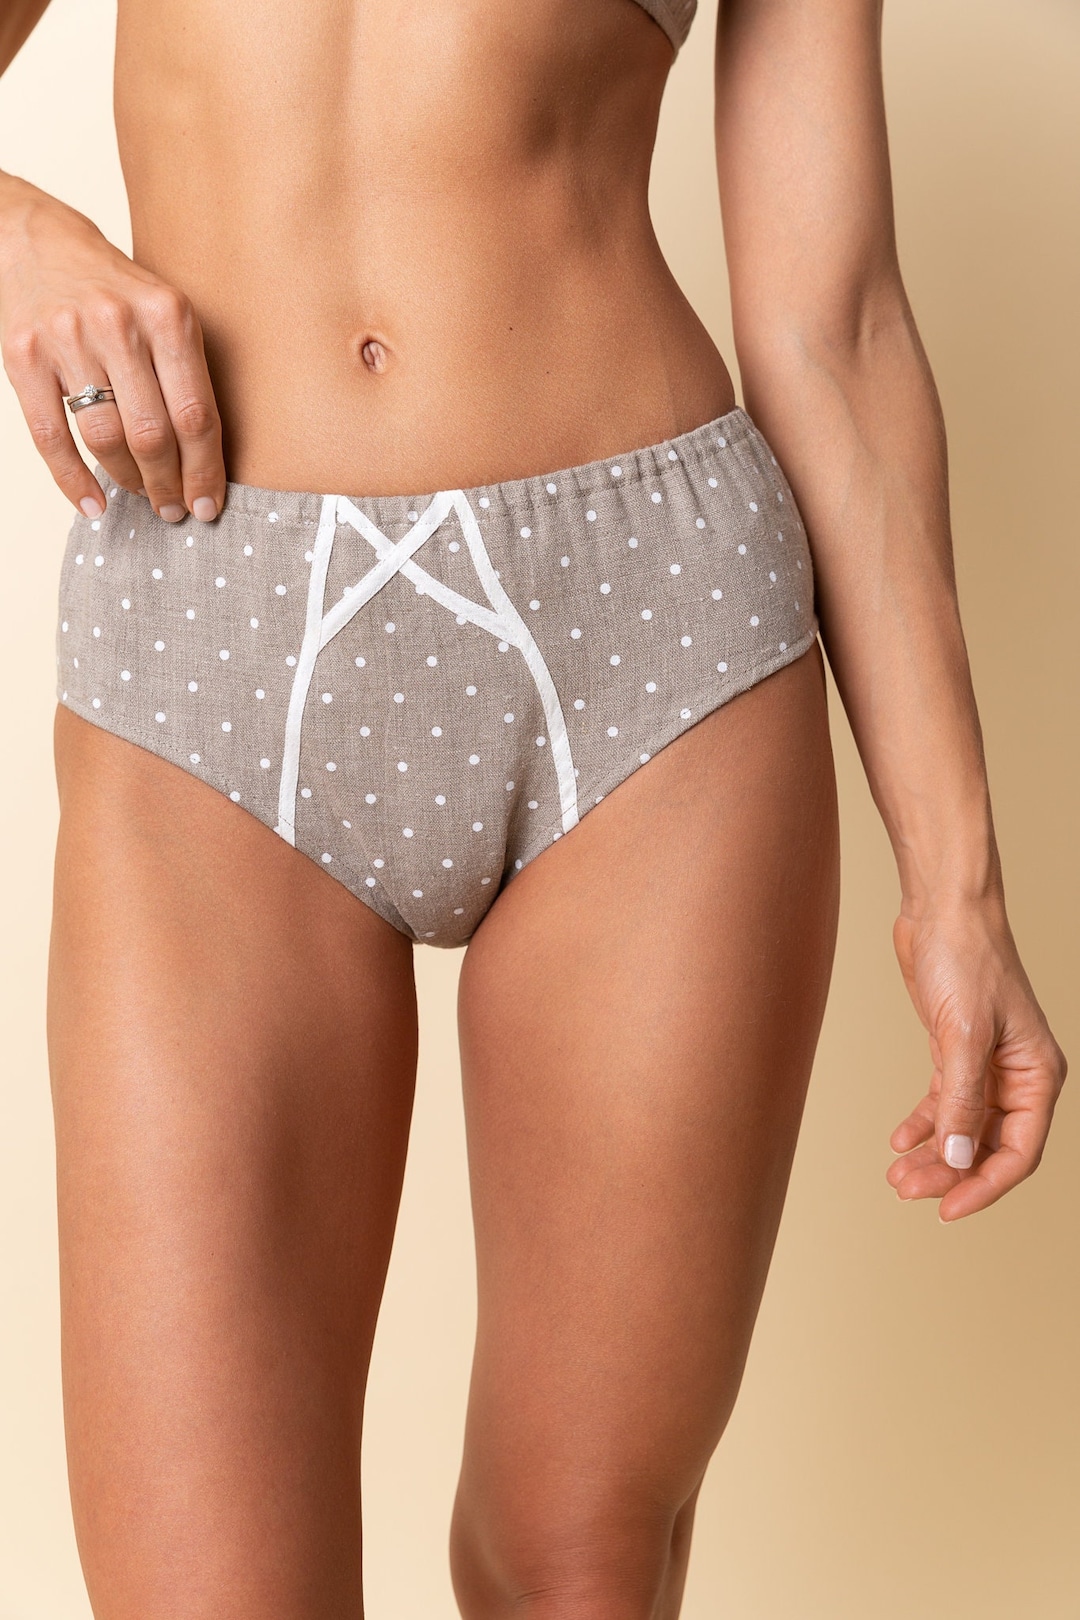 Women's Panties for Winter Thickened Underwear Comfortable Elastic